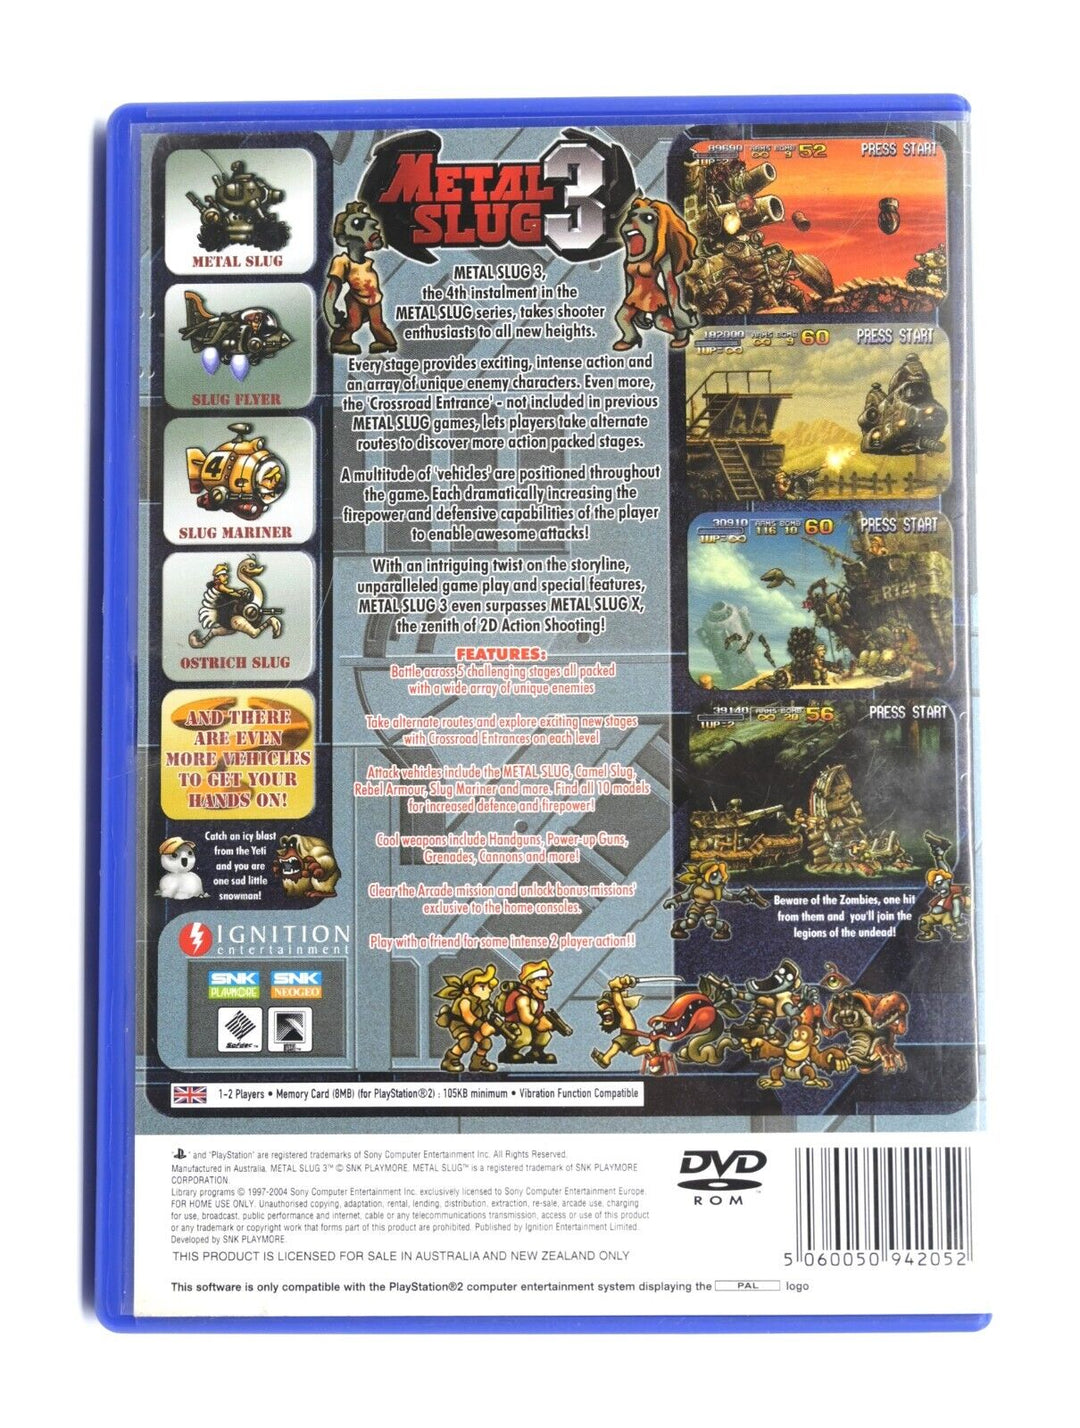 Metal Slug 3 #1 - Sony Playstation 2 / PS2 Game - PAL - FREE POST!